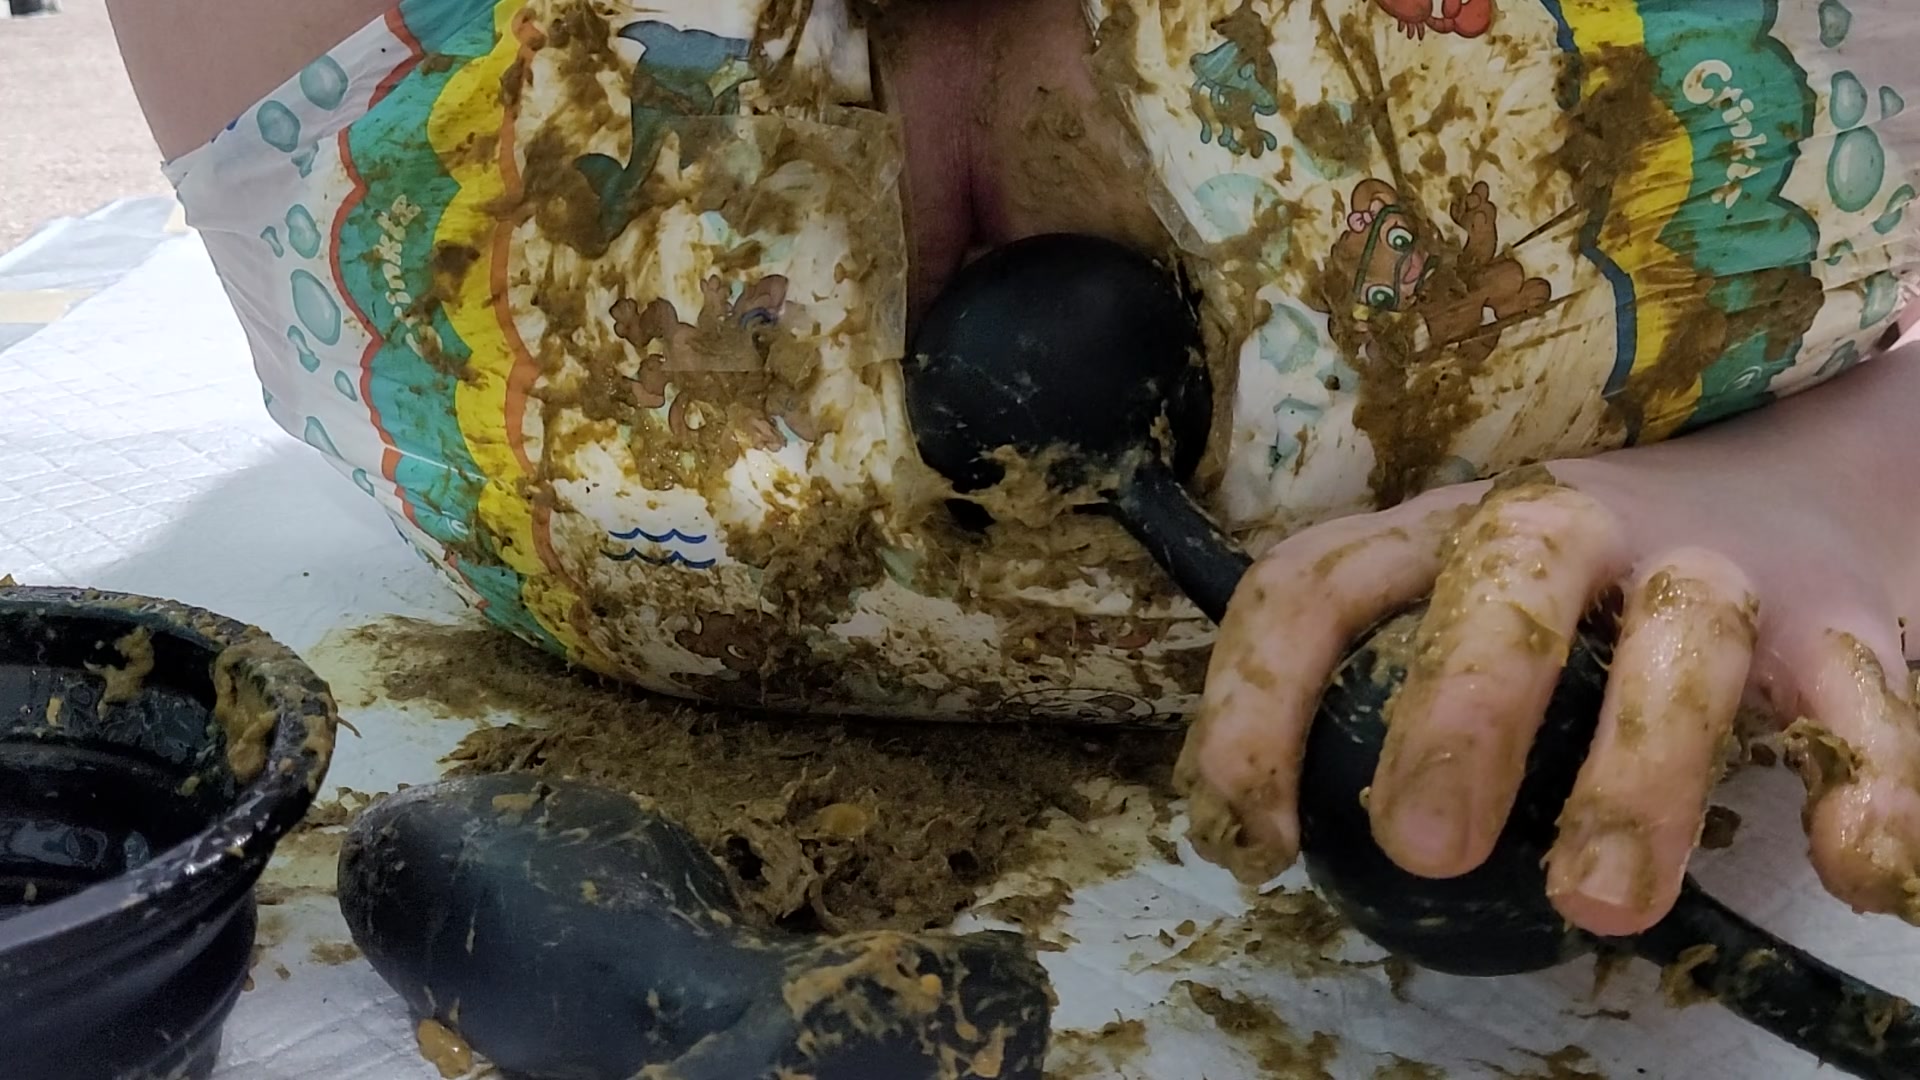 Anal Beads Through Dirty Diaper